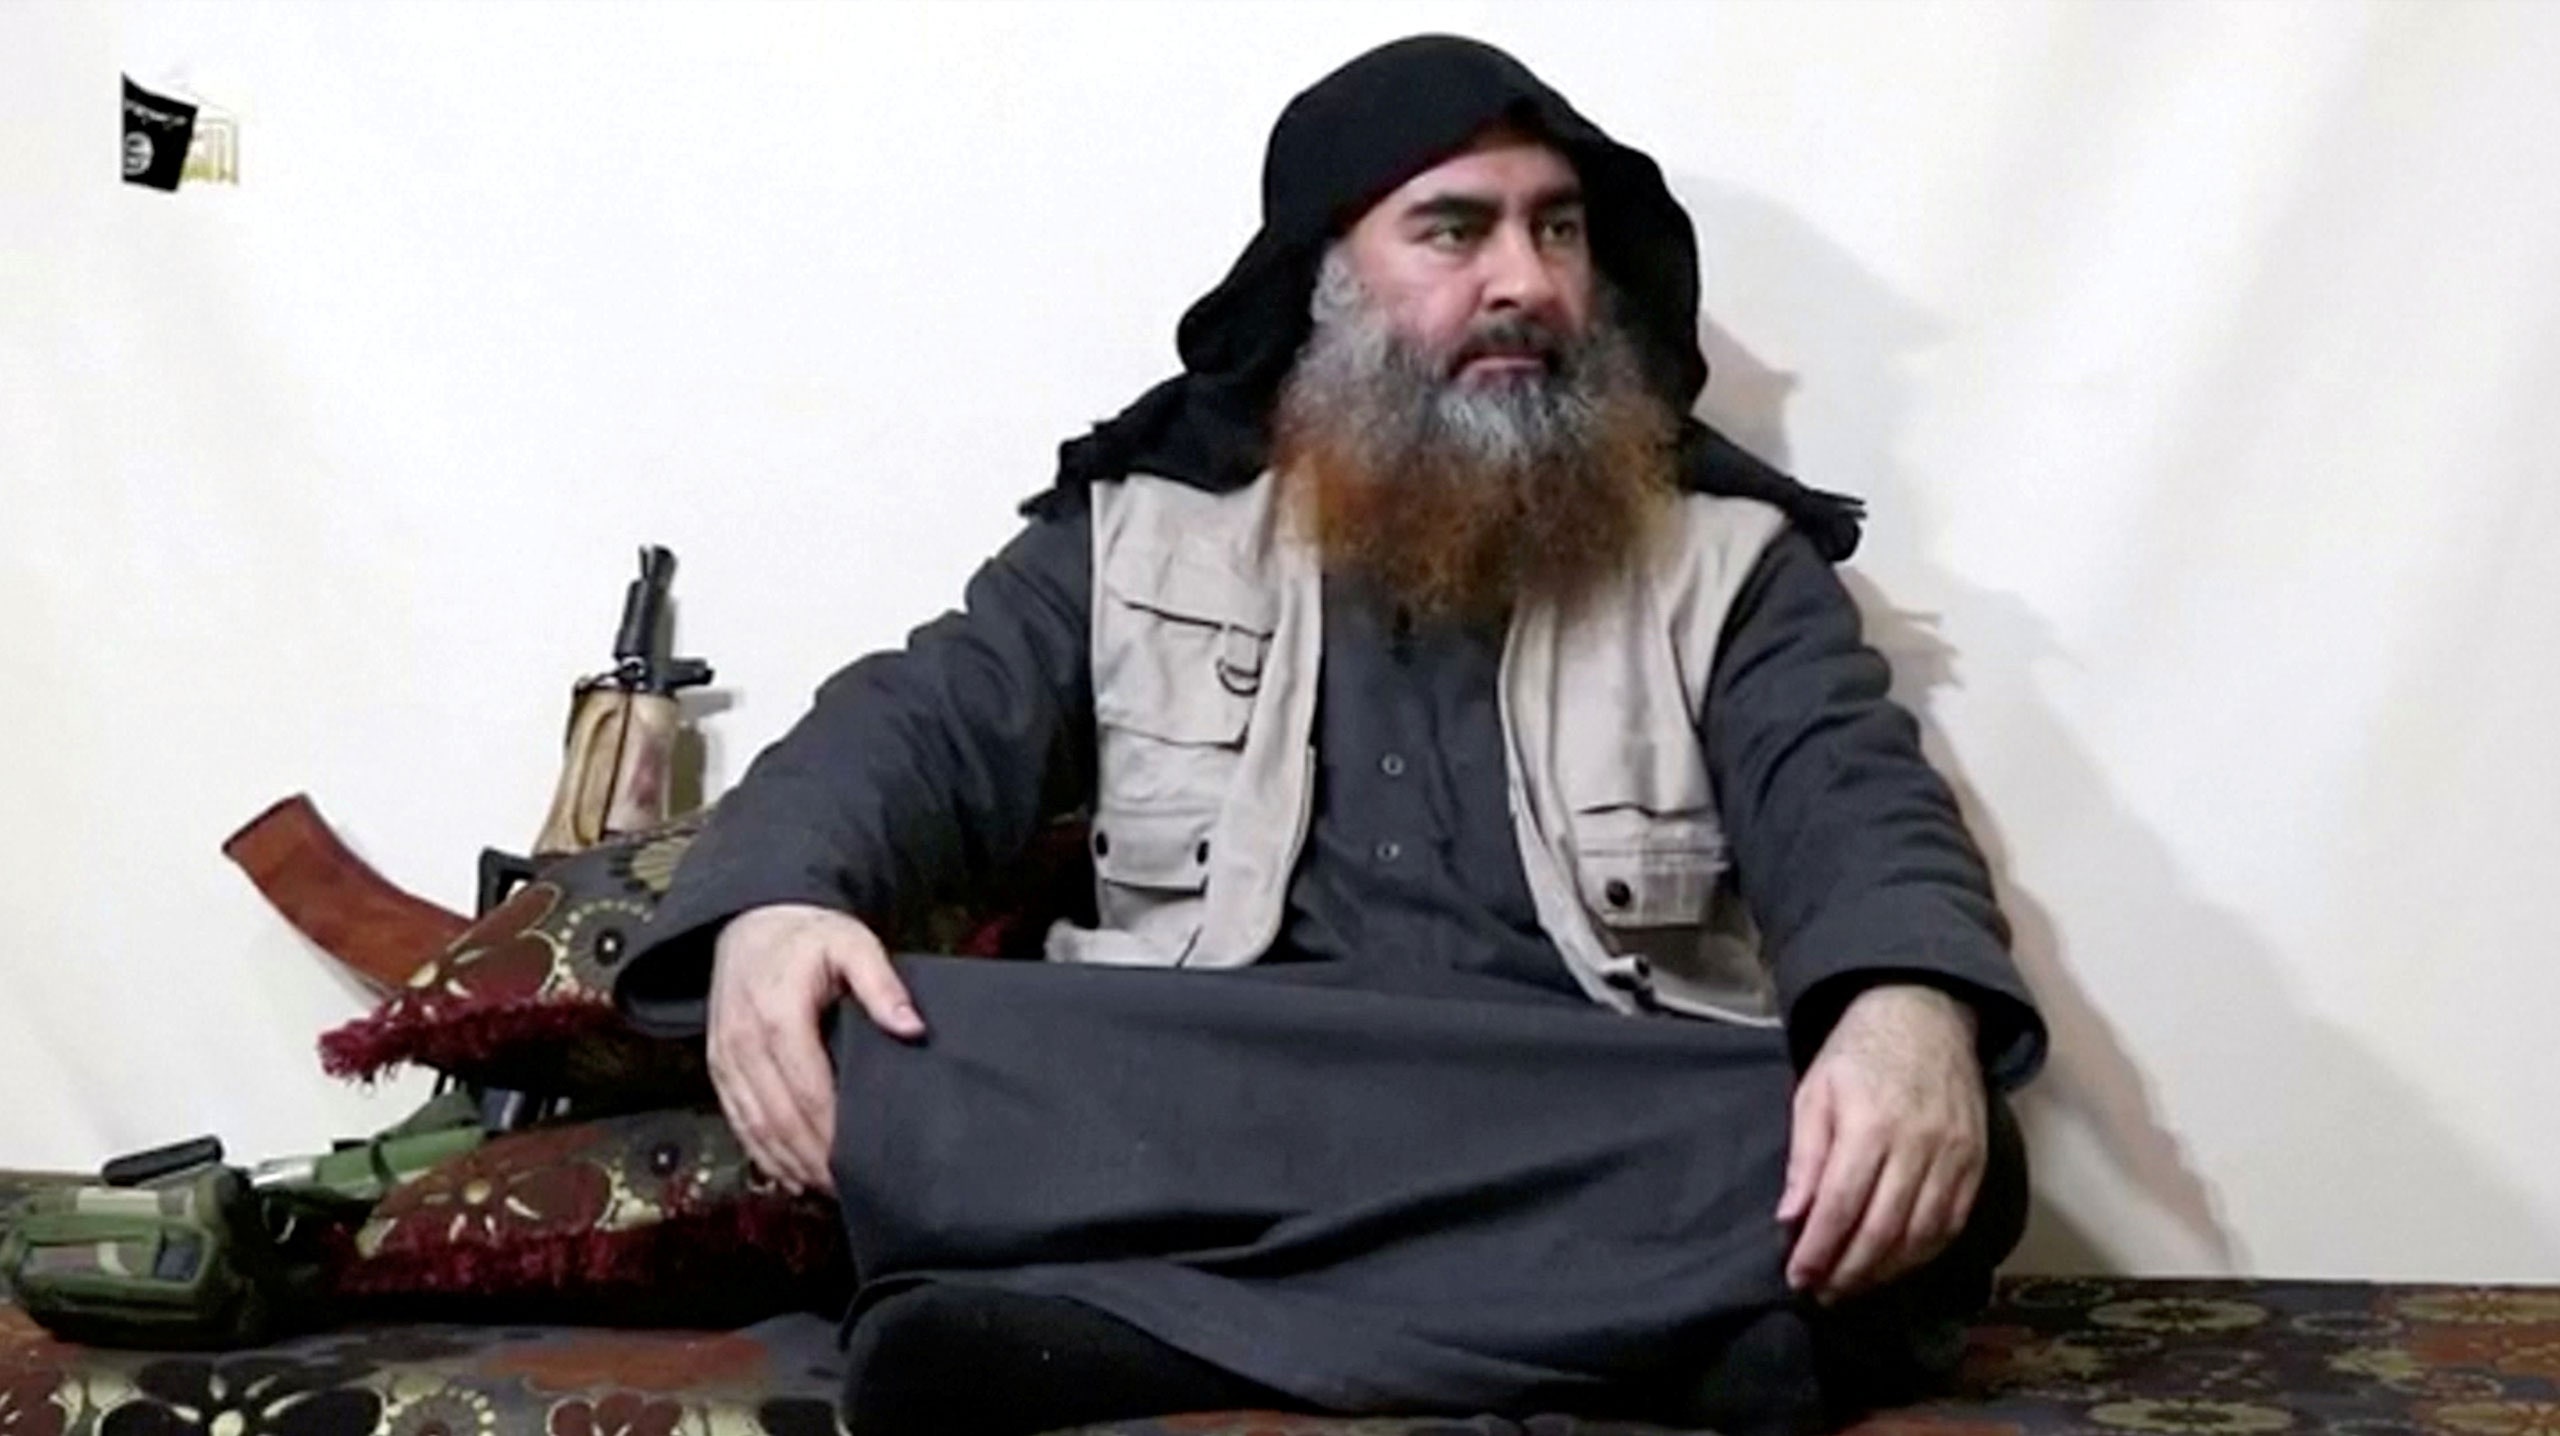 ISIS's Leader Abu Bakr al-Baghdadi